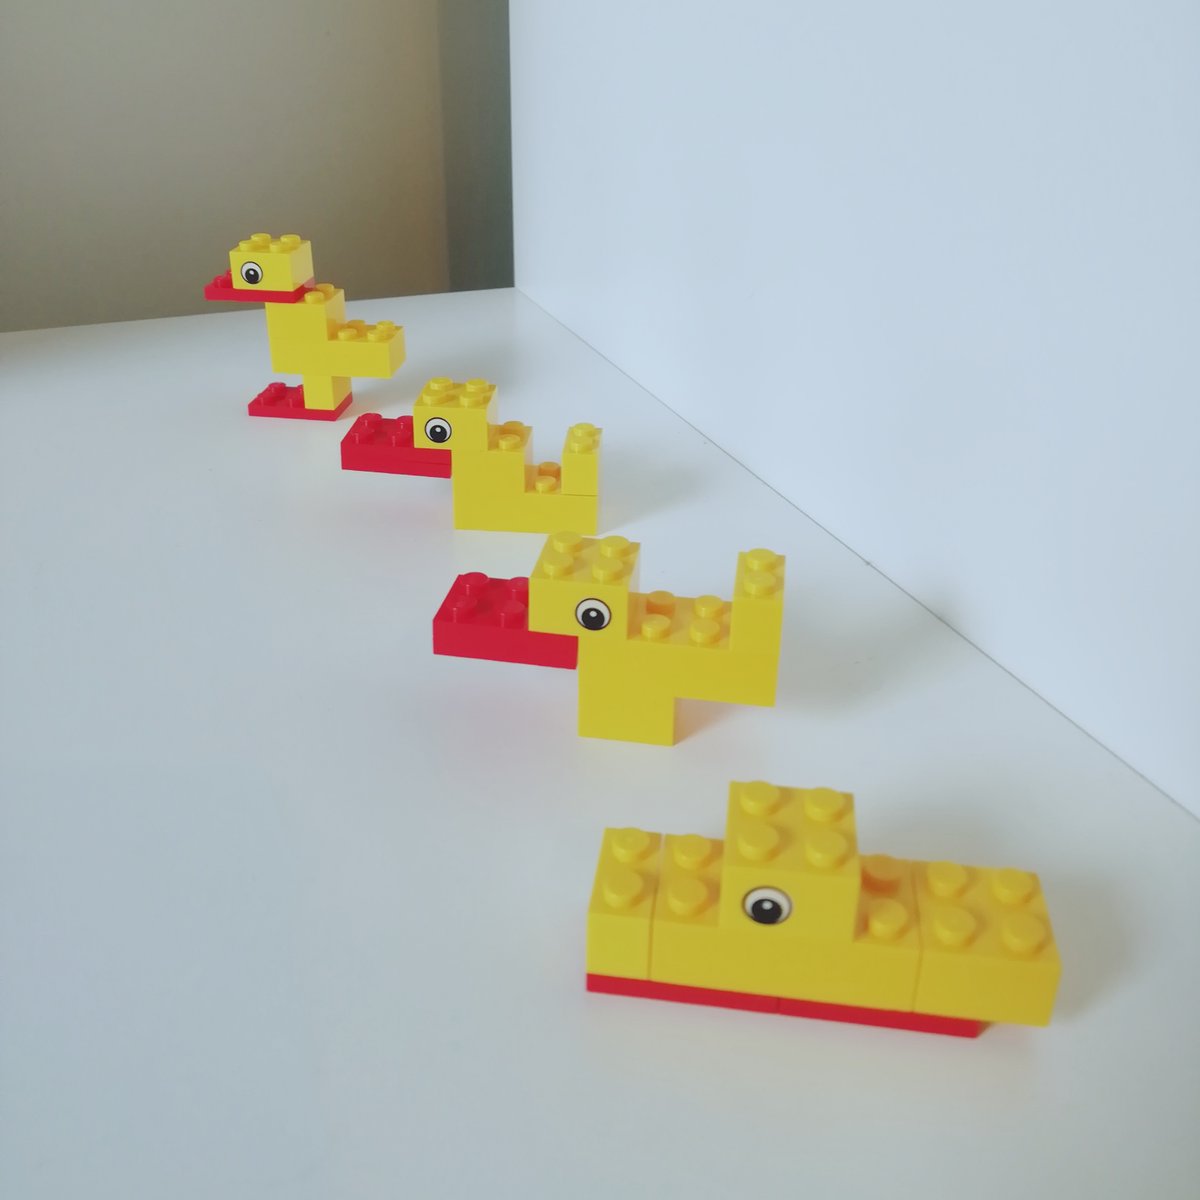 Lego ducks